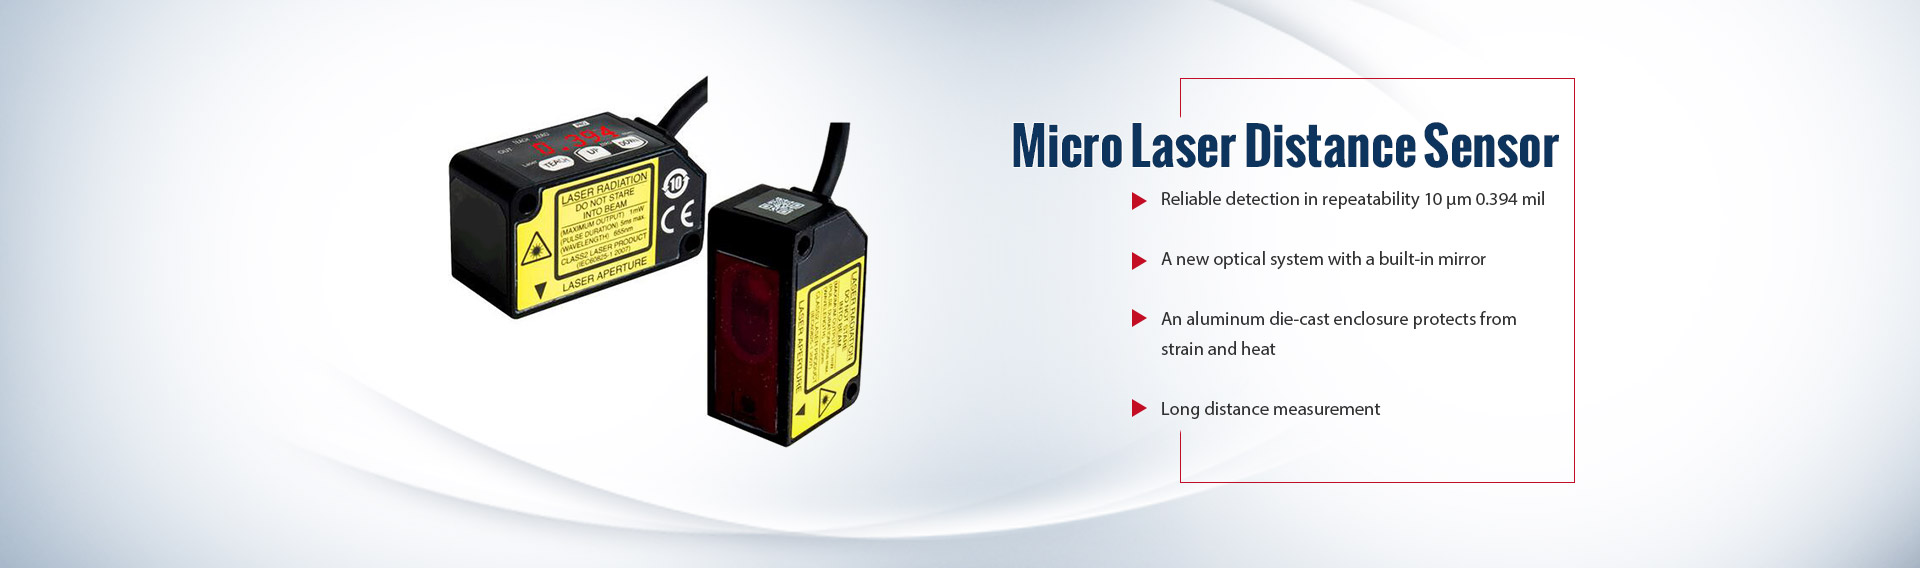 Micro Laser Distance Sensor